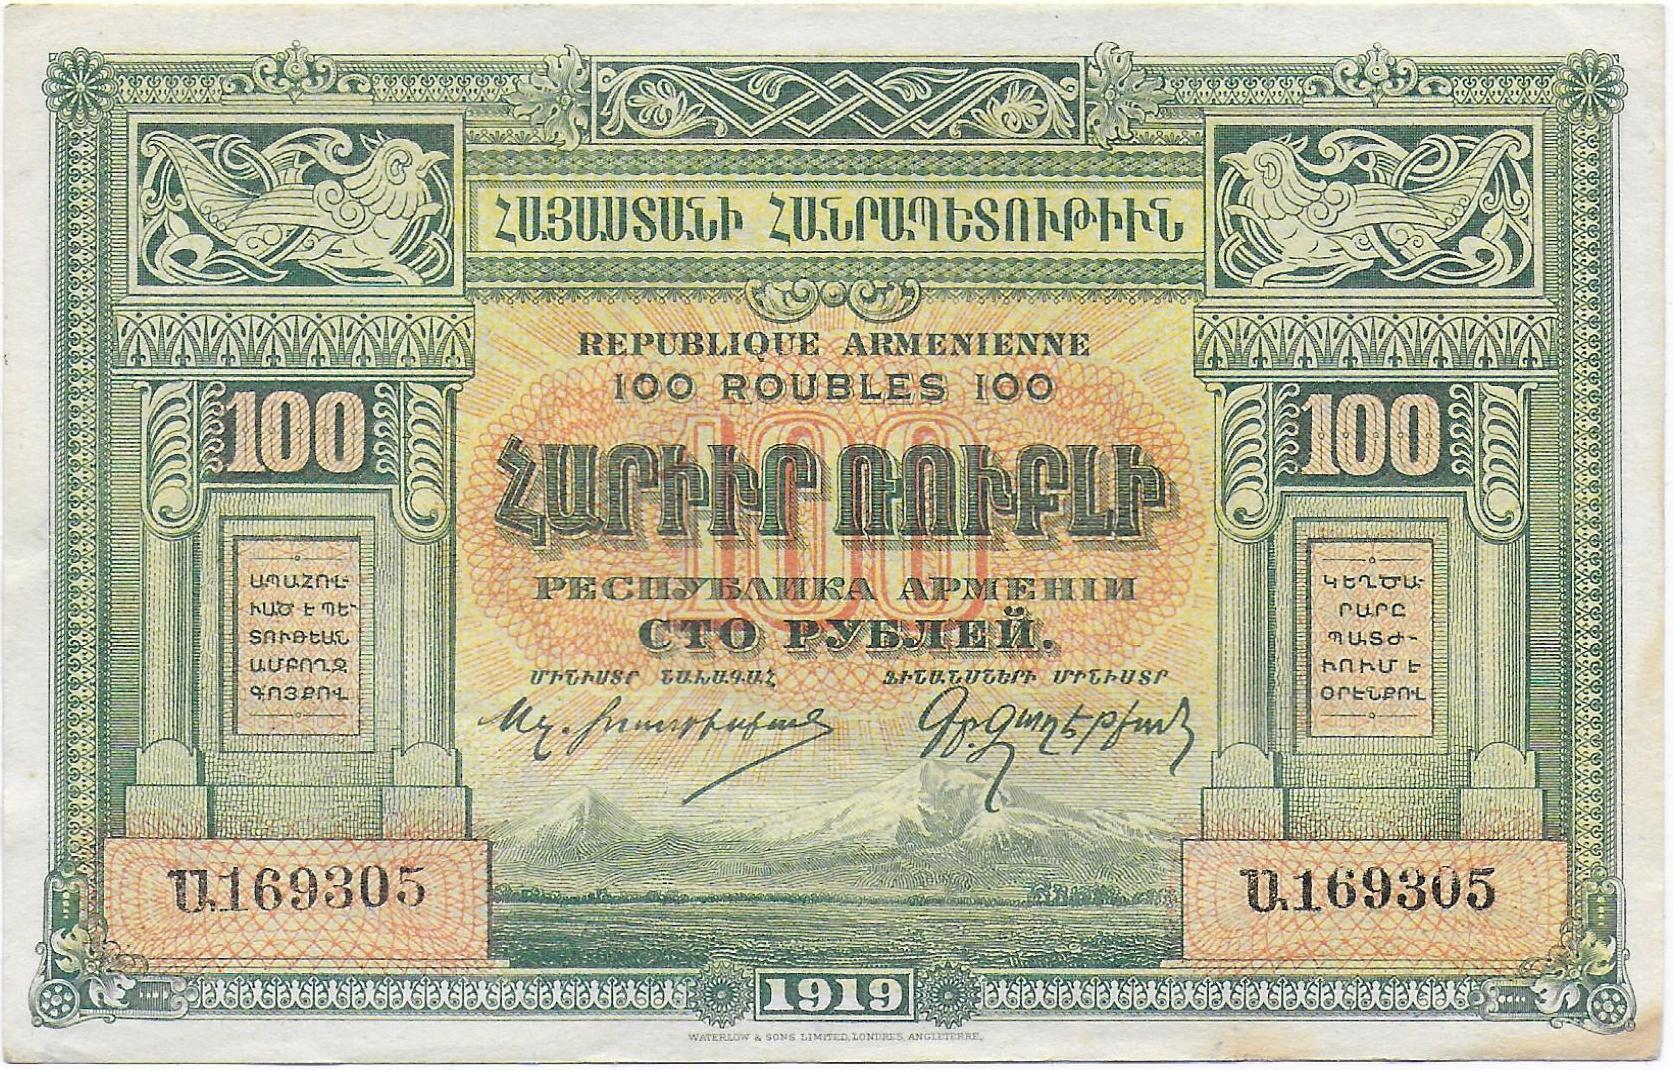 ARMENIA, 100 rubli, 1919 (1920), P31 front.jpg